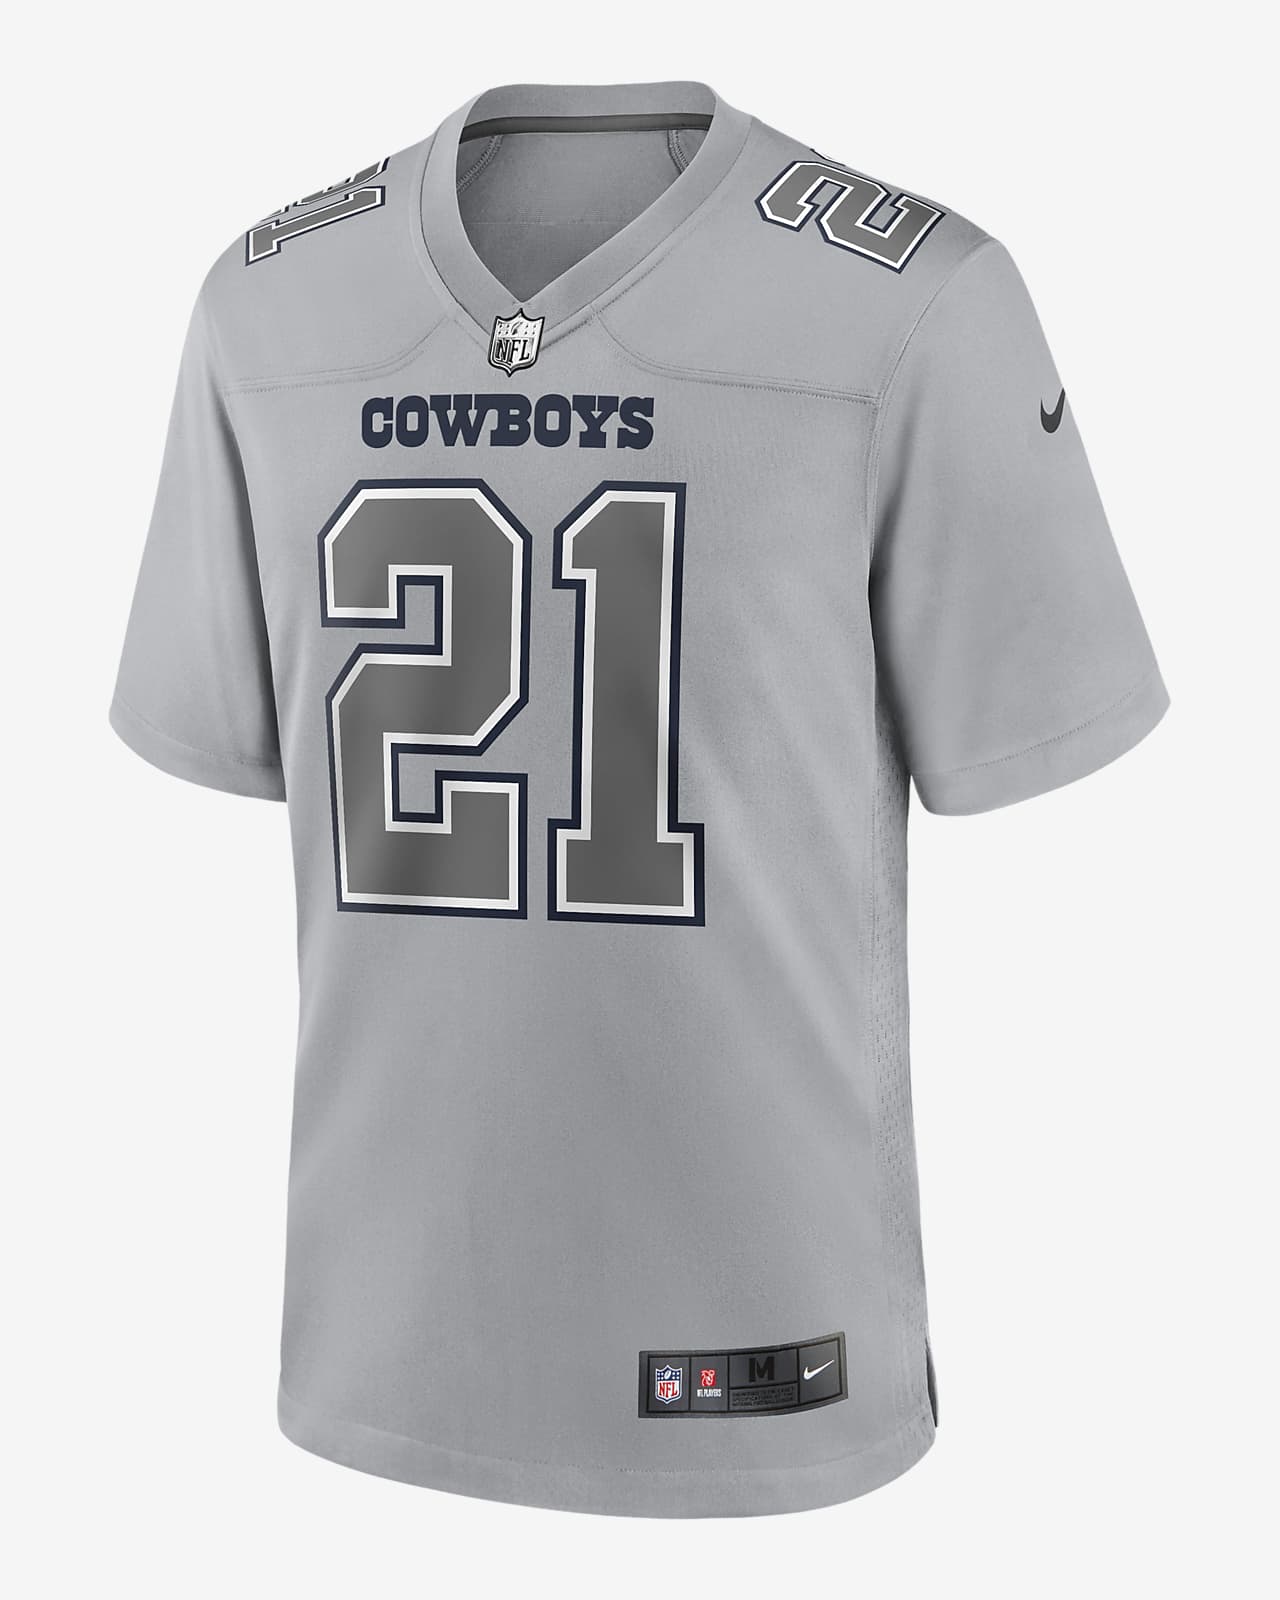 NFL Dallas Cowboys Atmosphere (Ezekiel Elliott) Men's Fashion Football Jersey